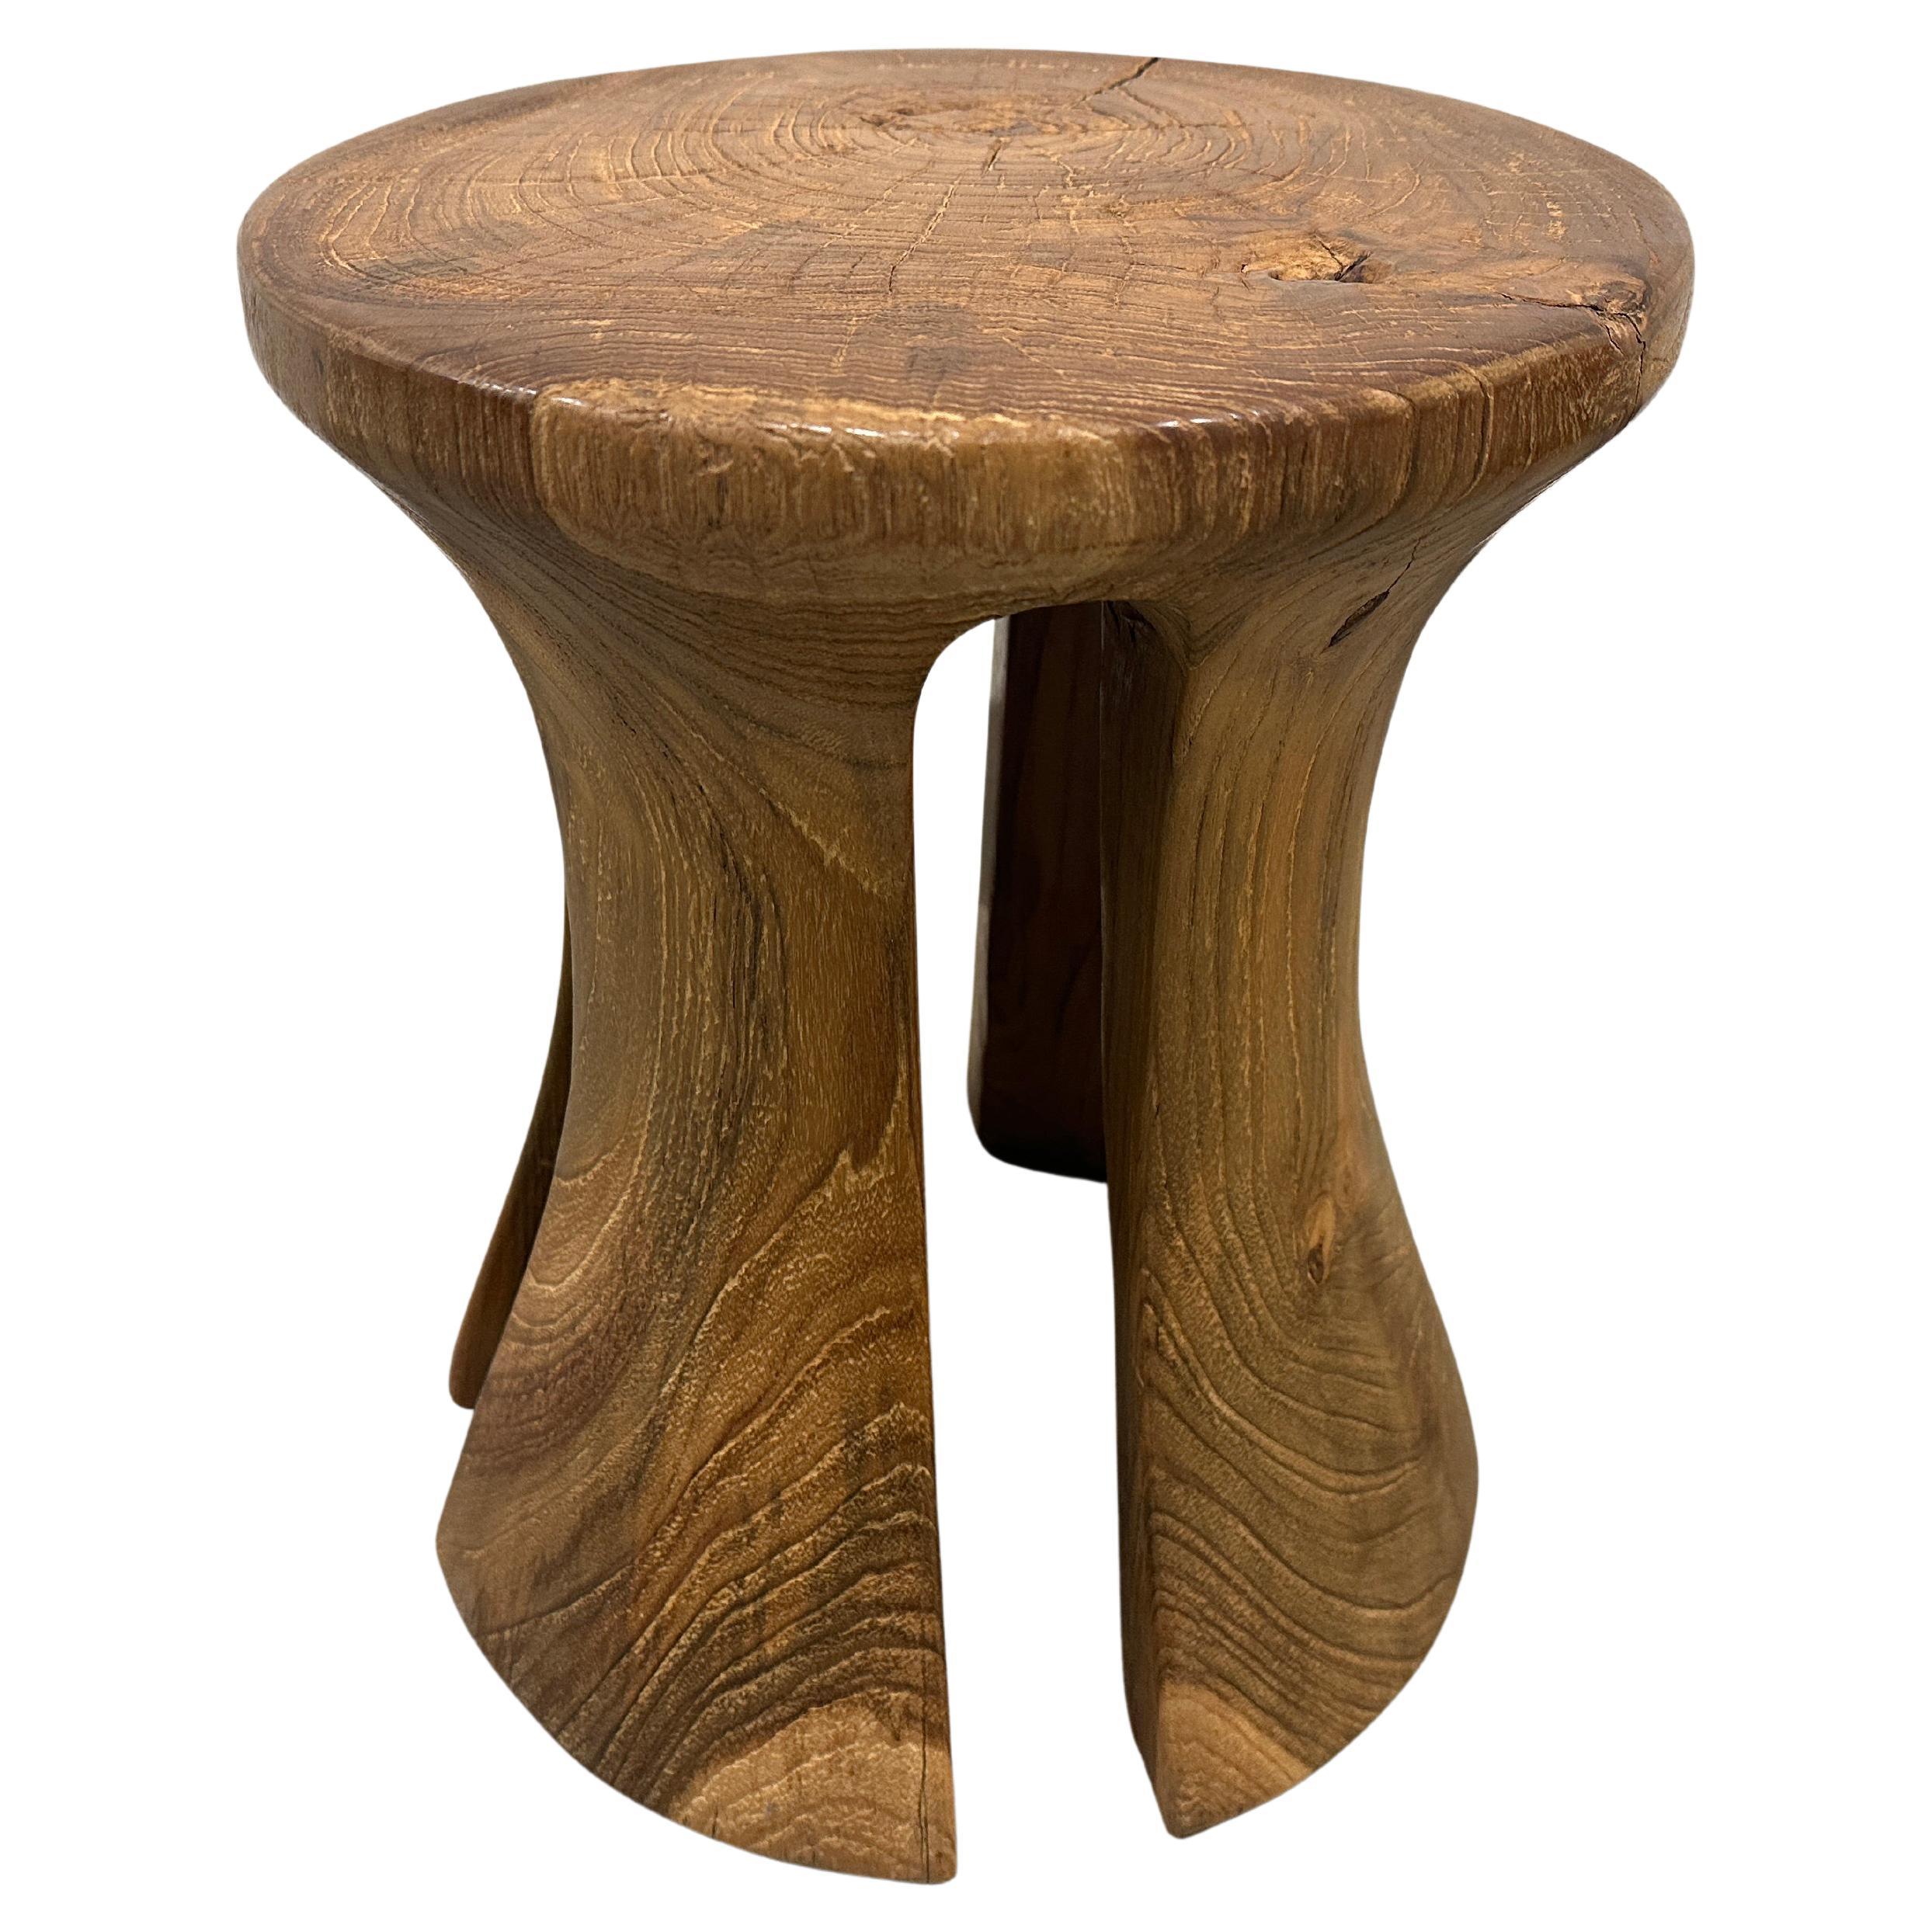 Andrianna Shamaris Sculptural Teak Wood Side Table or Stool For Sale